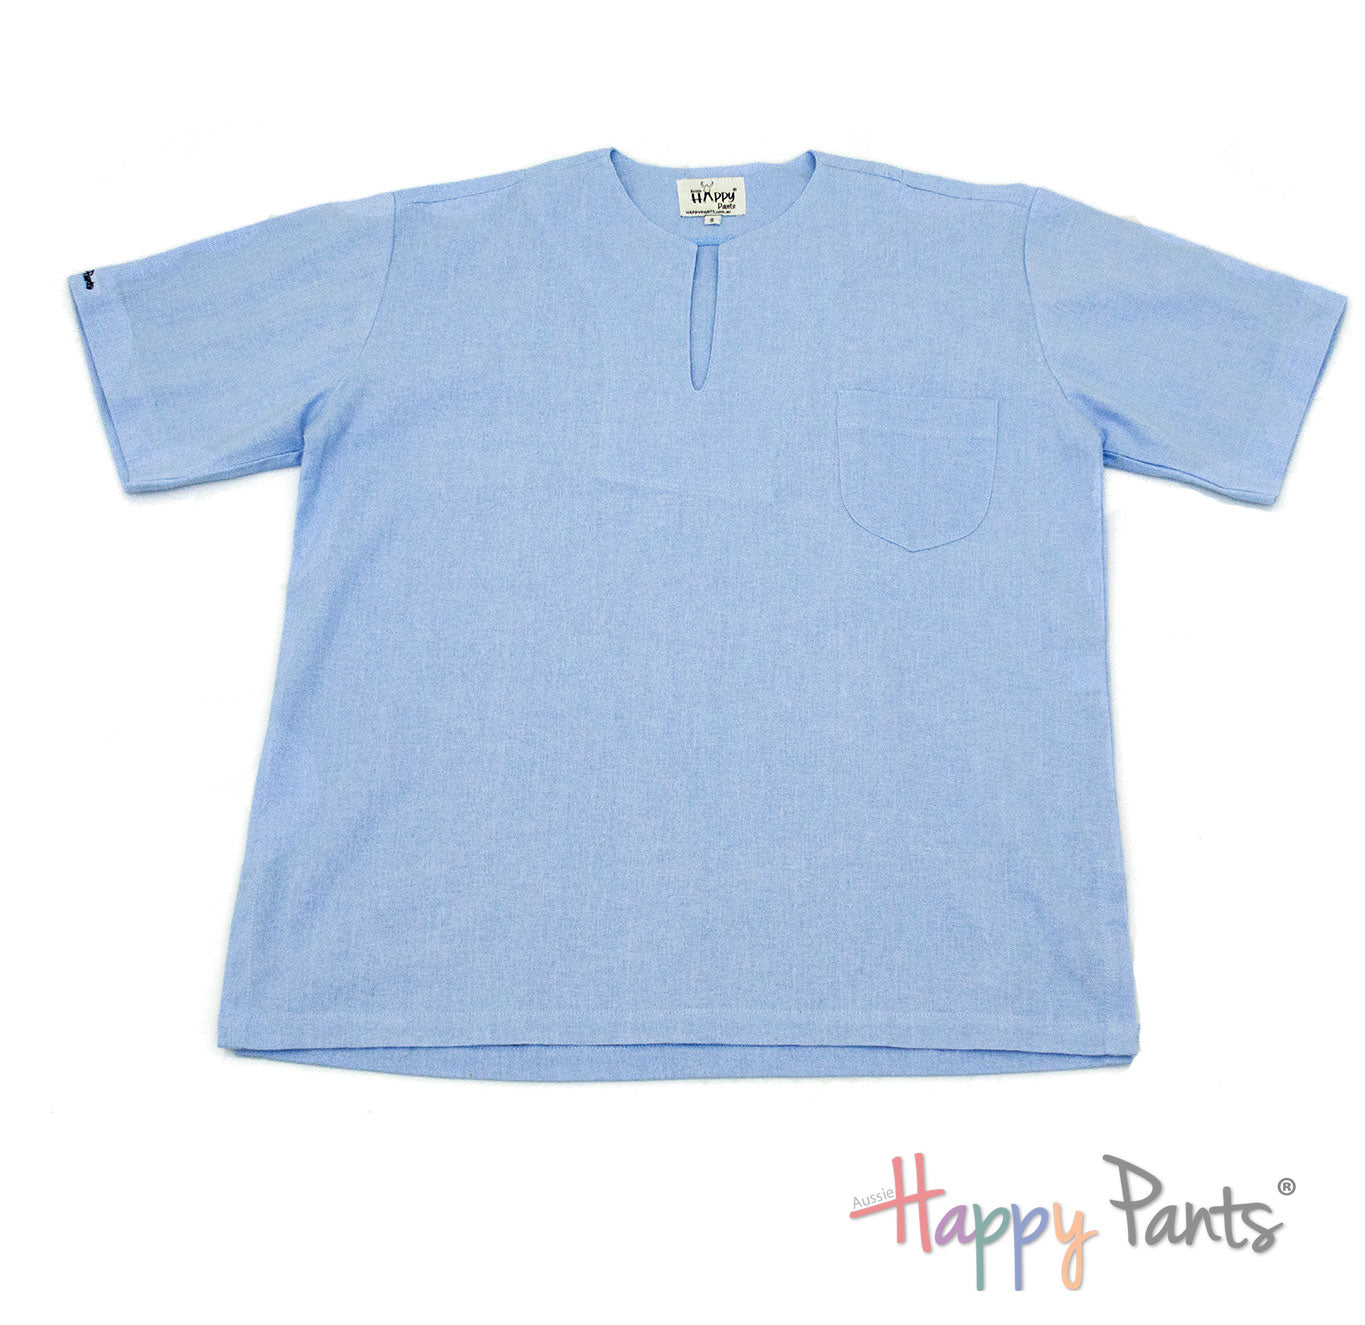 Powder Blue Men’s Resort Cotton Shirt